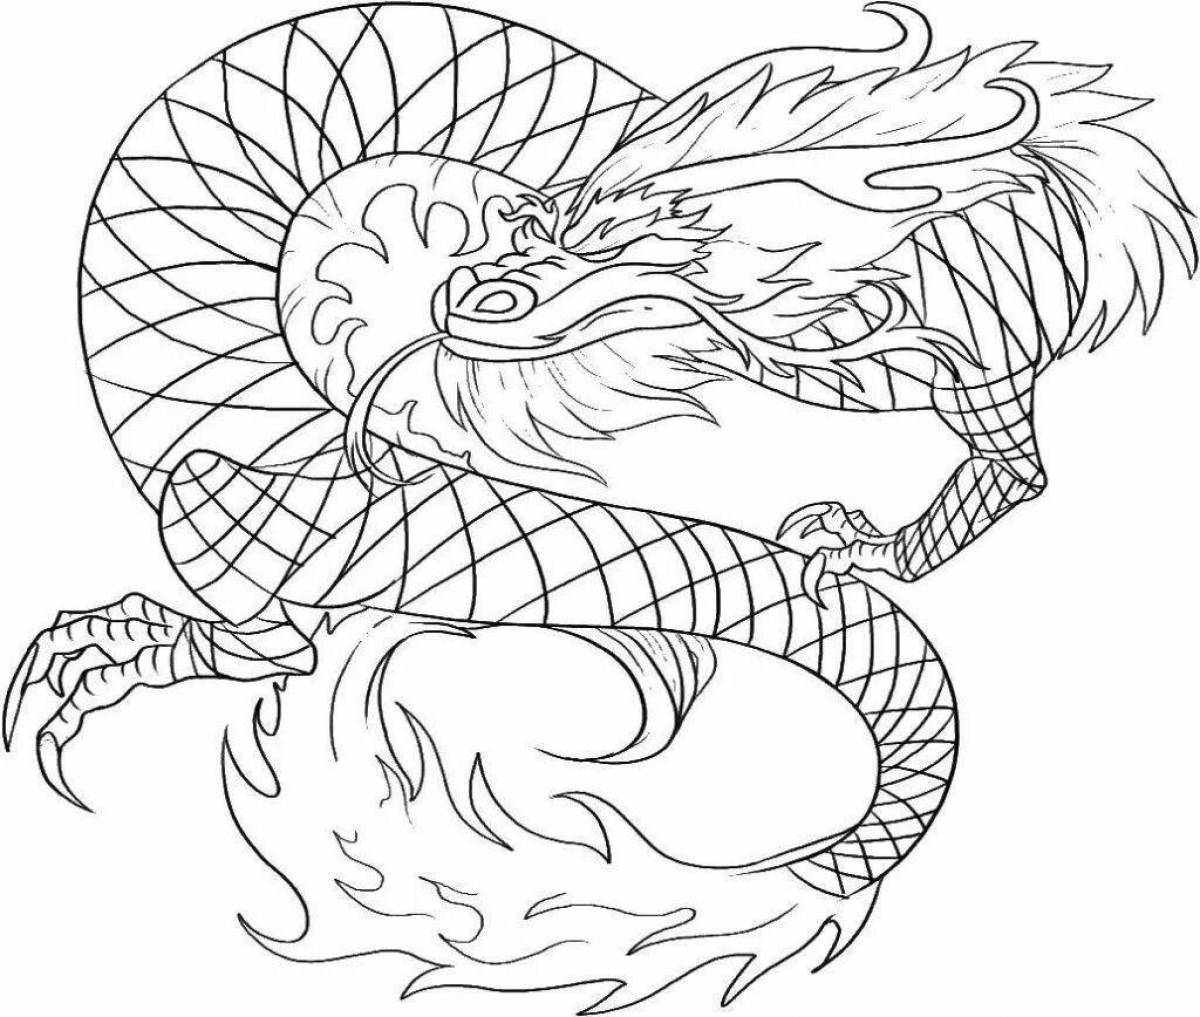 Chinese dragon #4